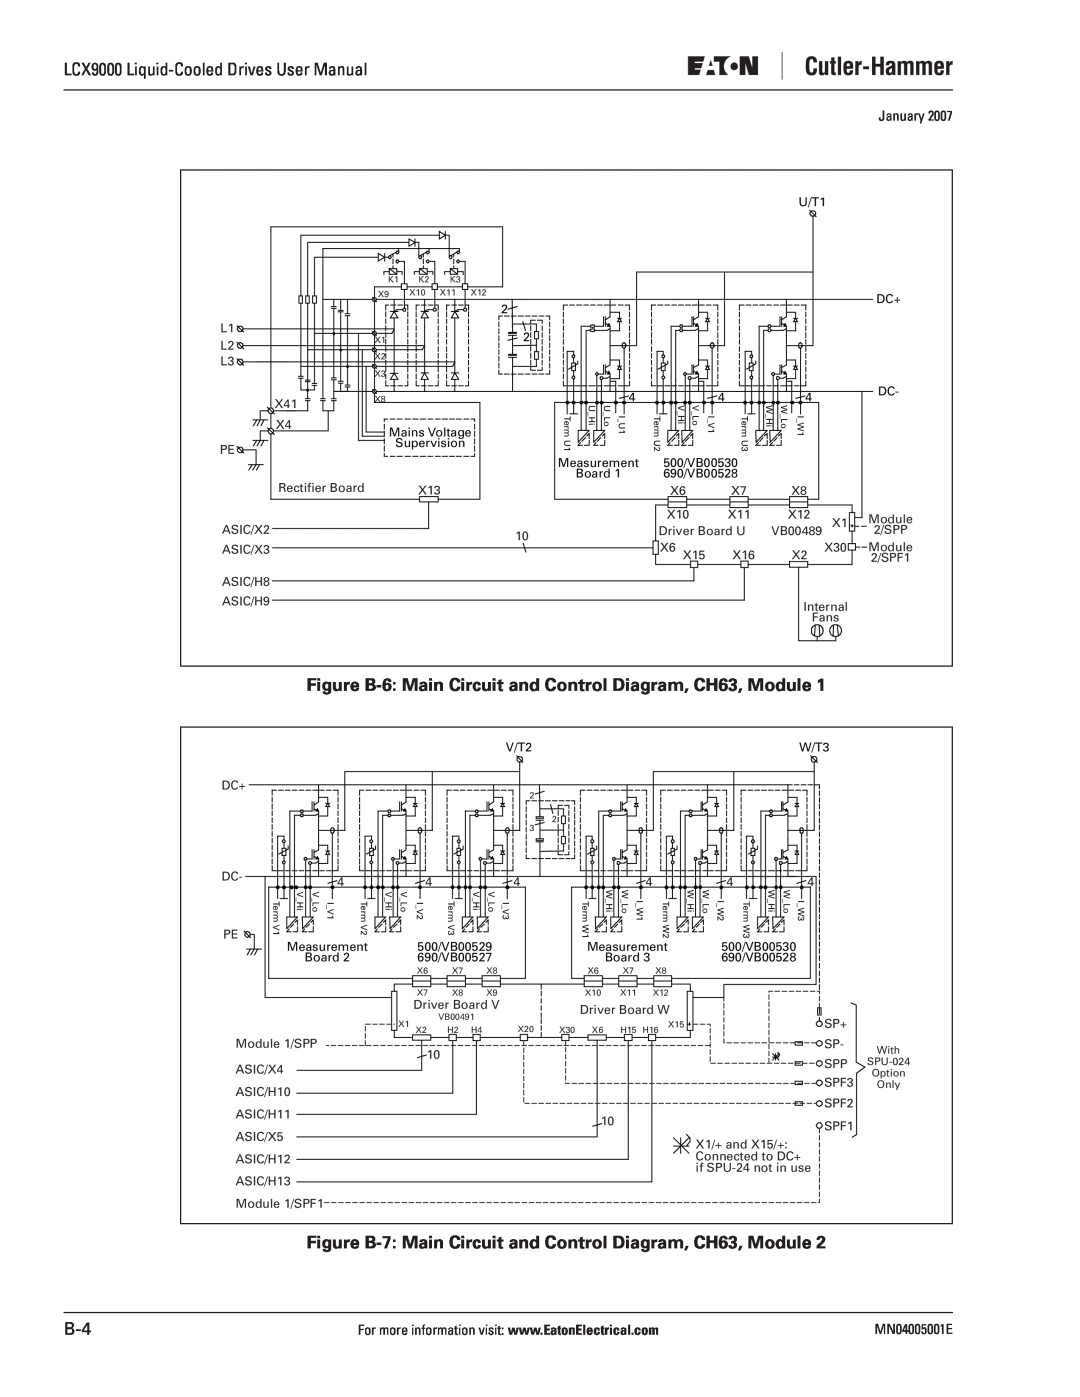 J. T. Eaton LCX9000 user manual Figure B-6 Main Circuit and Control Diagram, CH63, Module, January, VB00491 